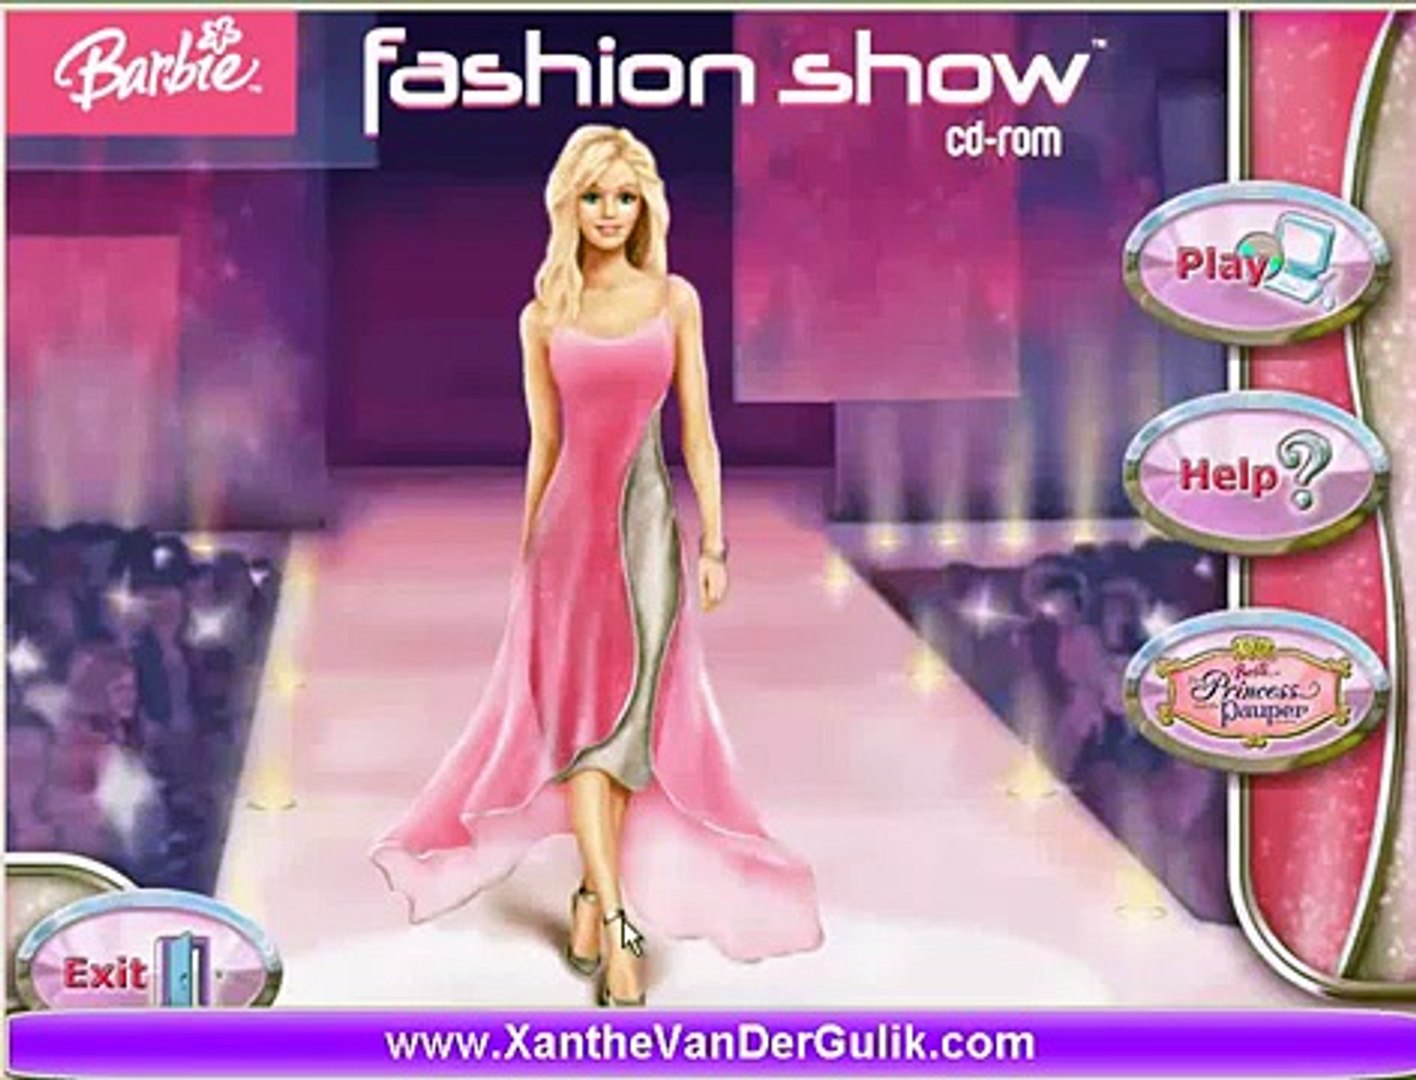 barbie games fashion show